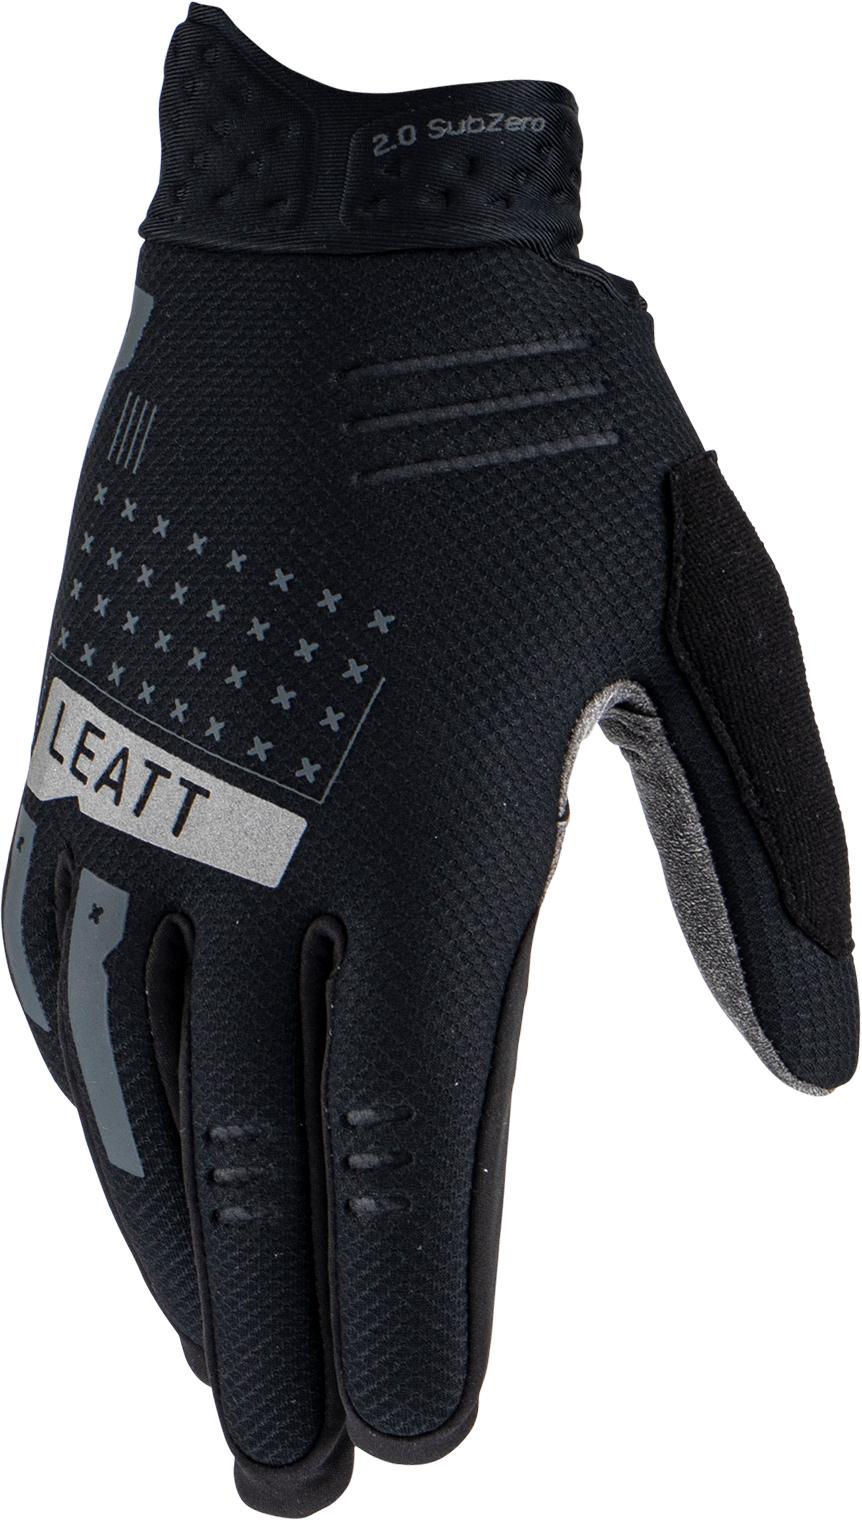 Leatt Mtb 2.0 Subzero Gloves - Black